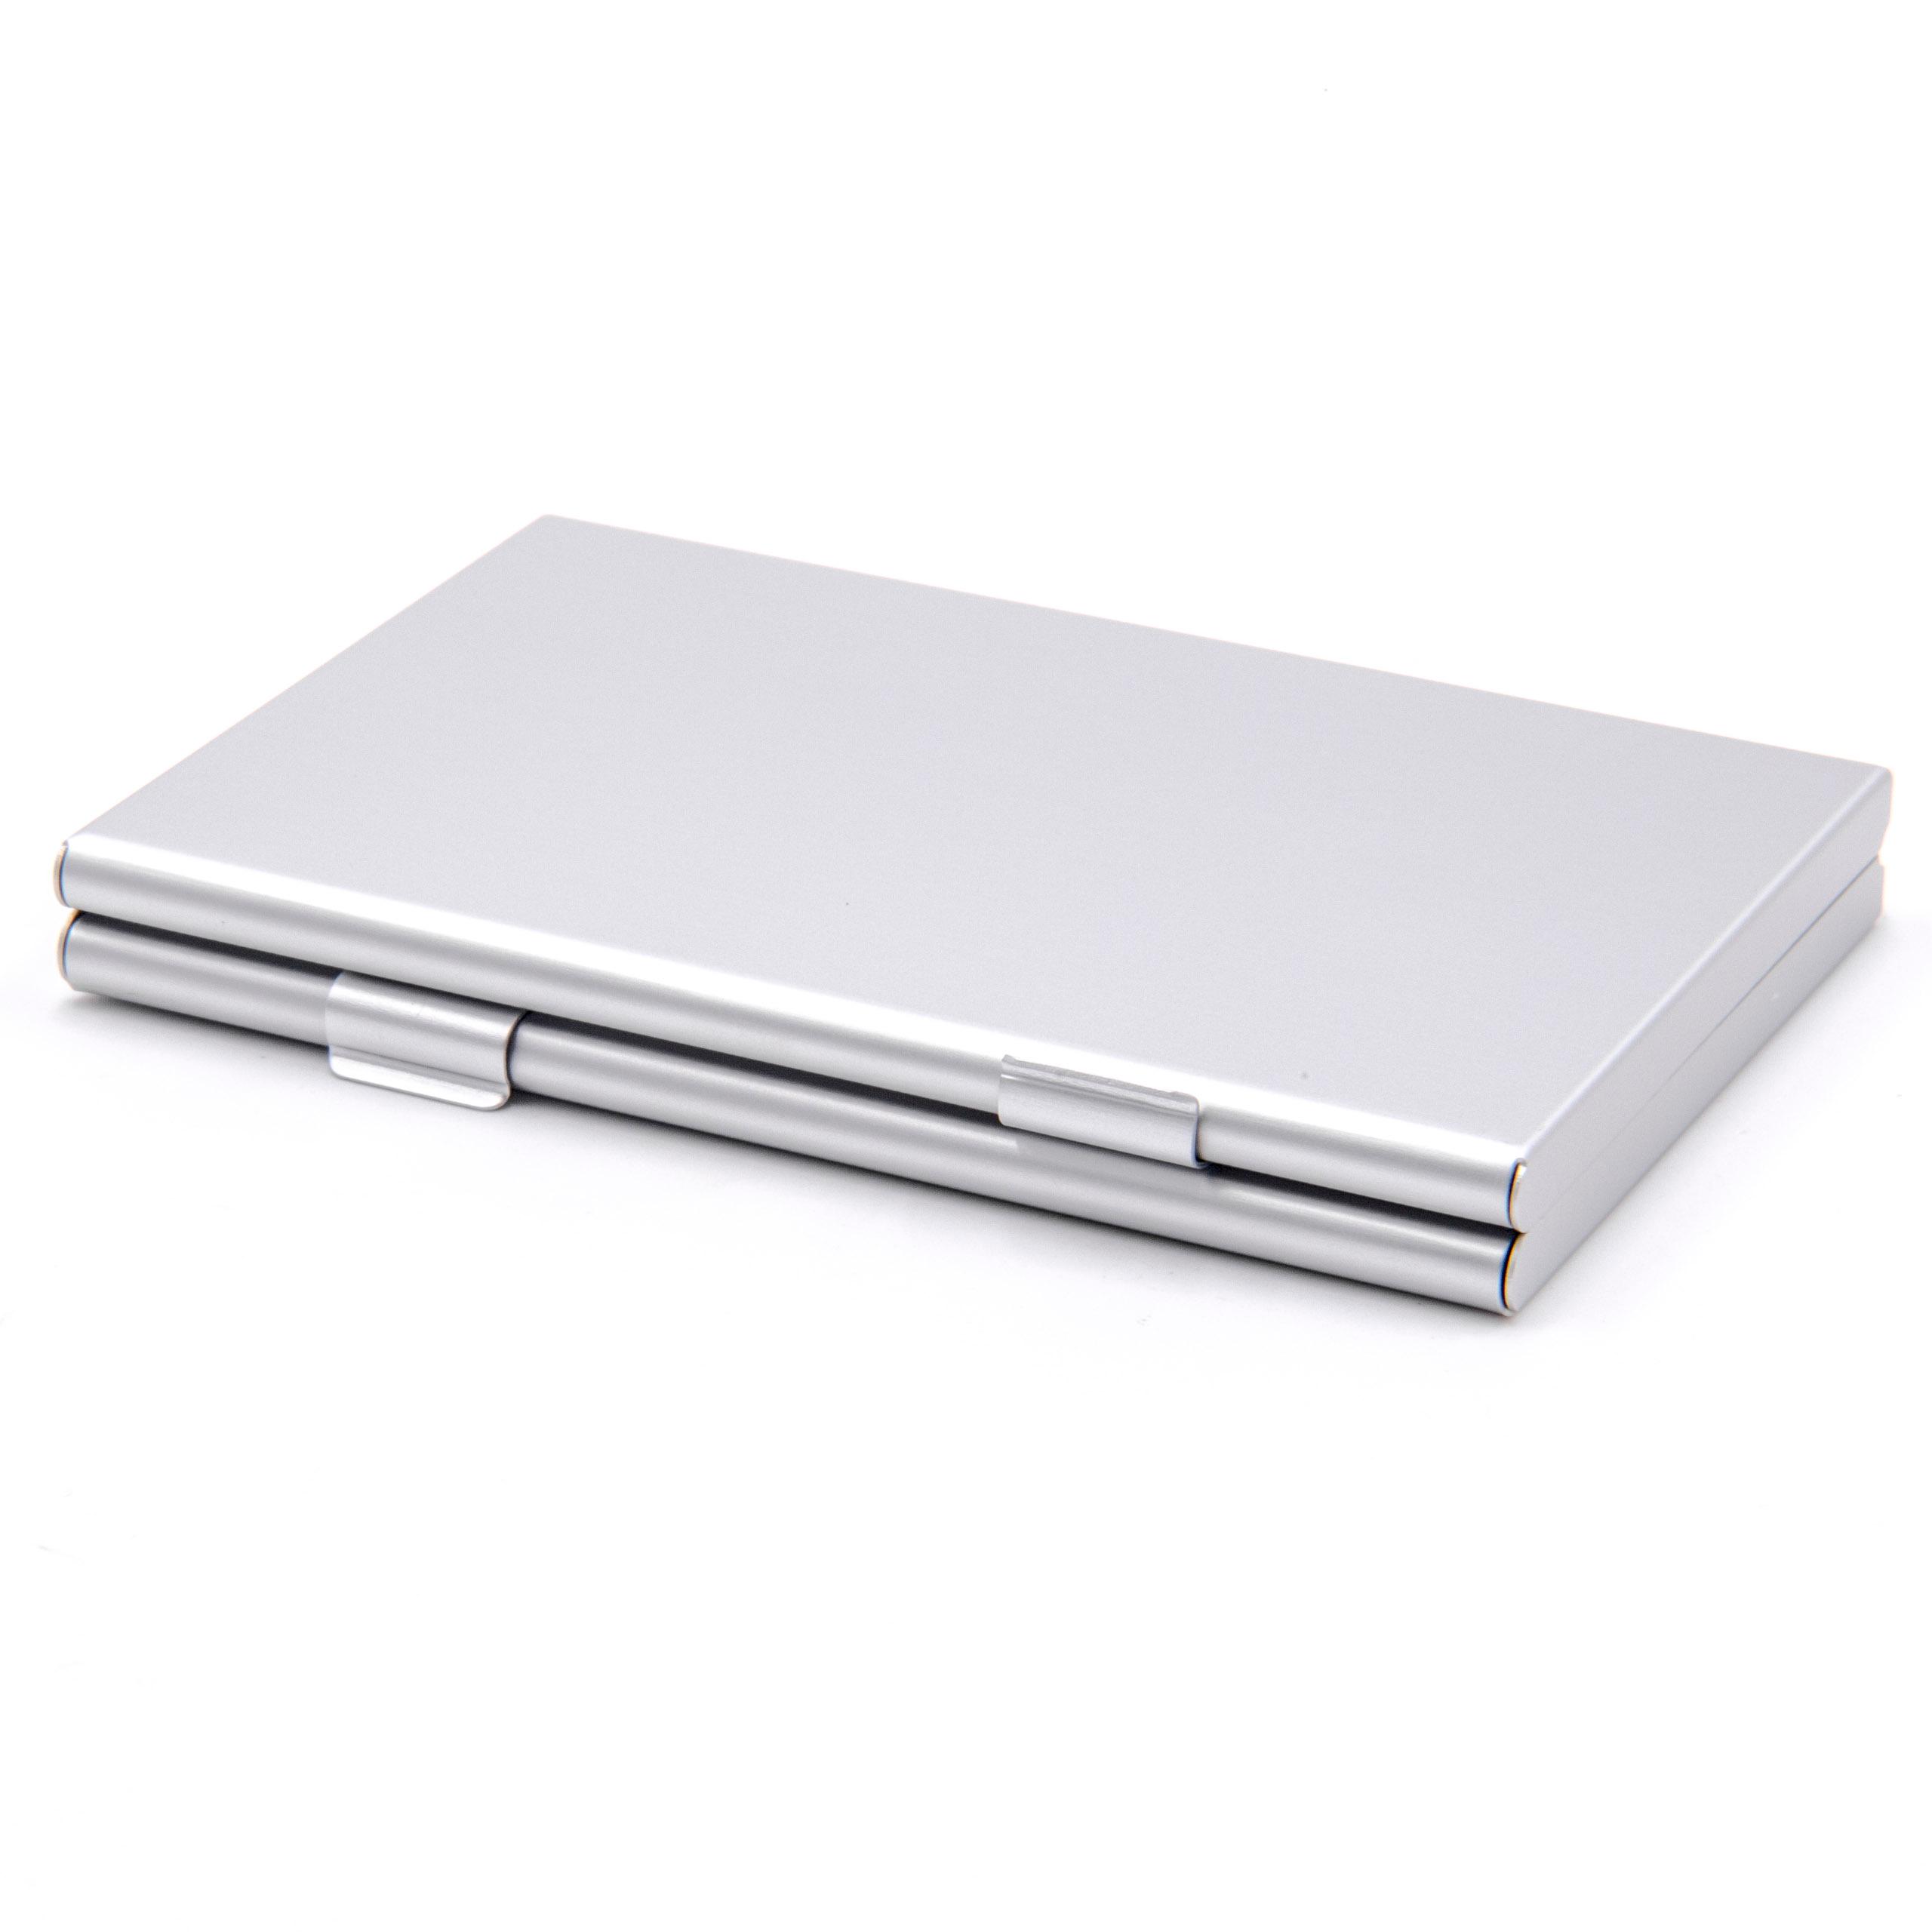 Etui passend für Speicherkarten 12x MicroSD - Case, Aluminium, silber